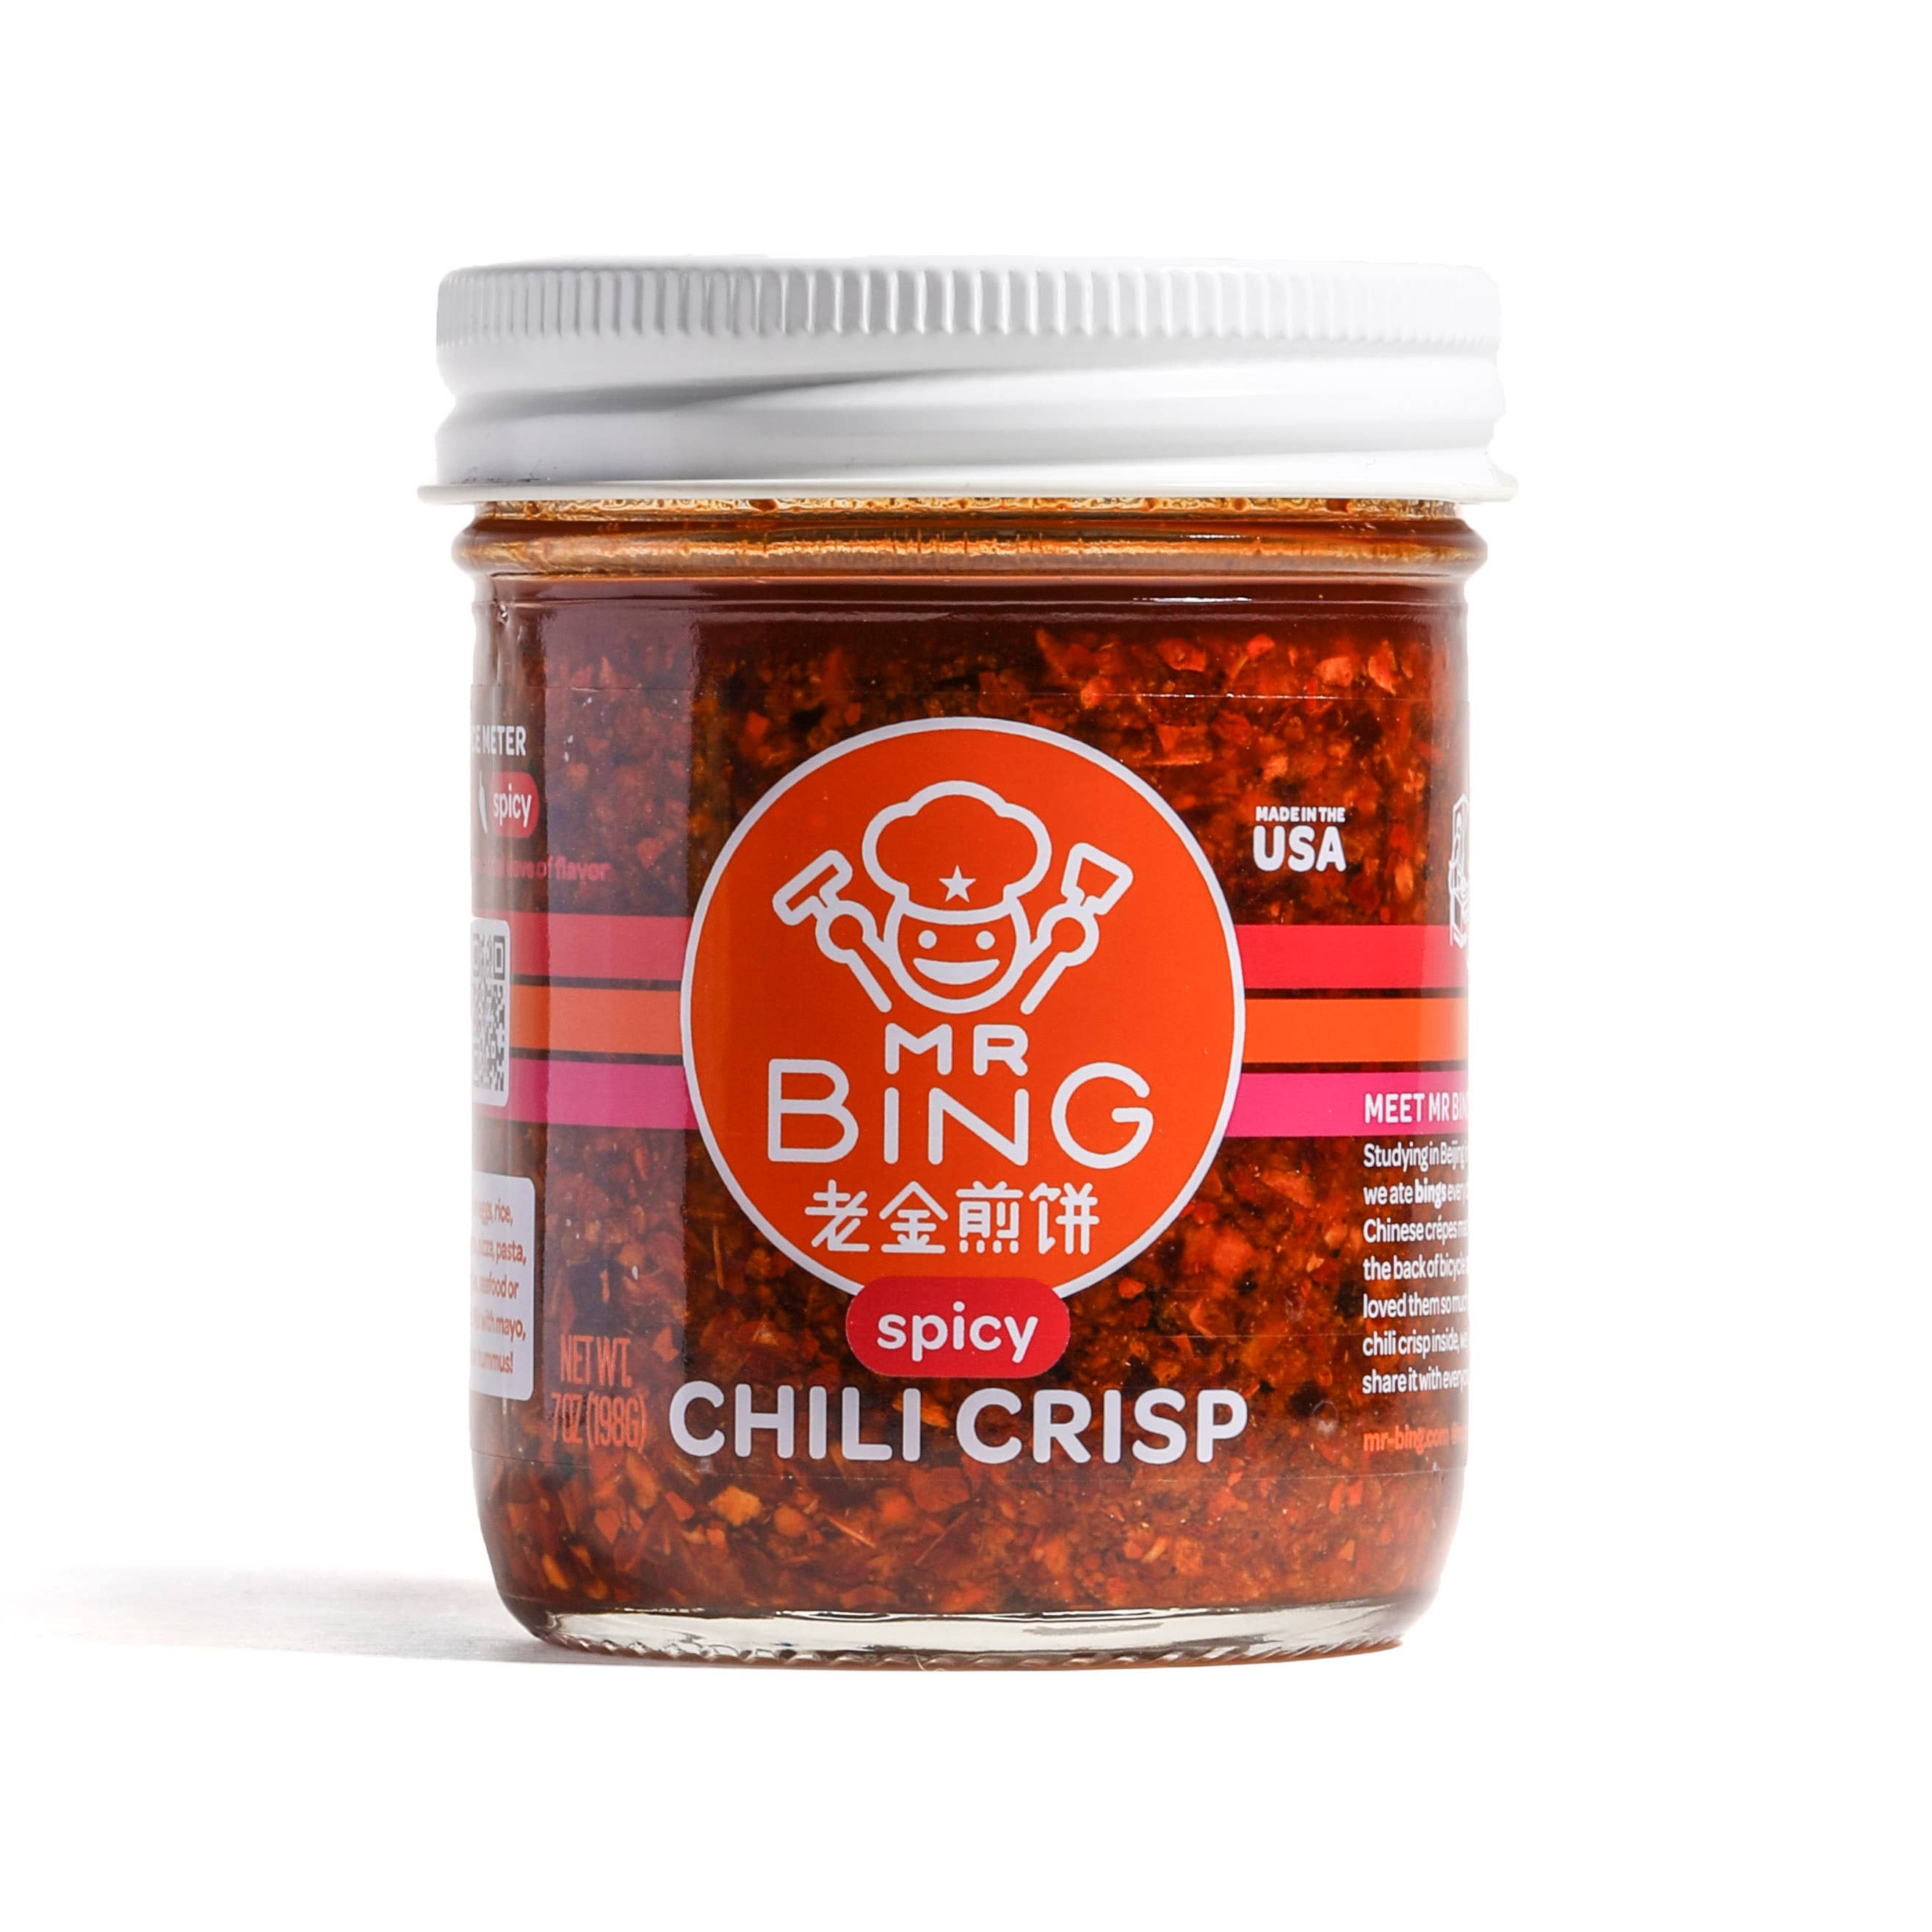 MR BING FOODS - Mr Bing Chili Crisp |  7 oz Spicy